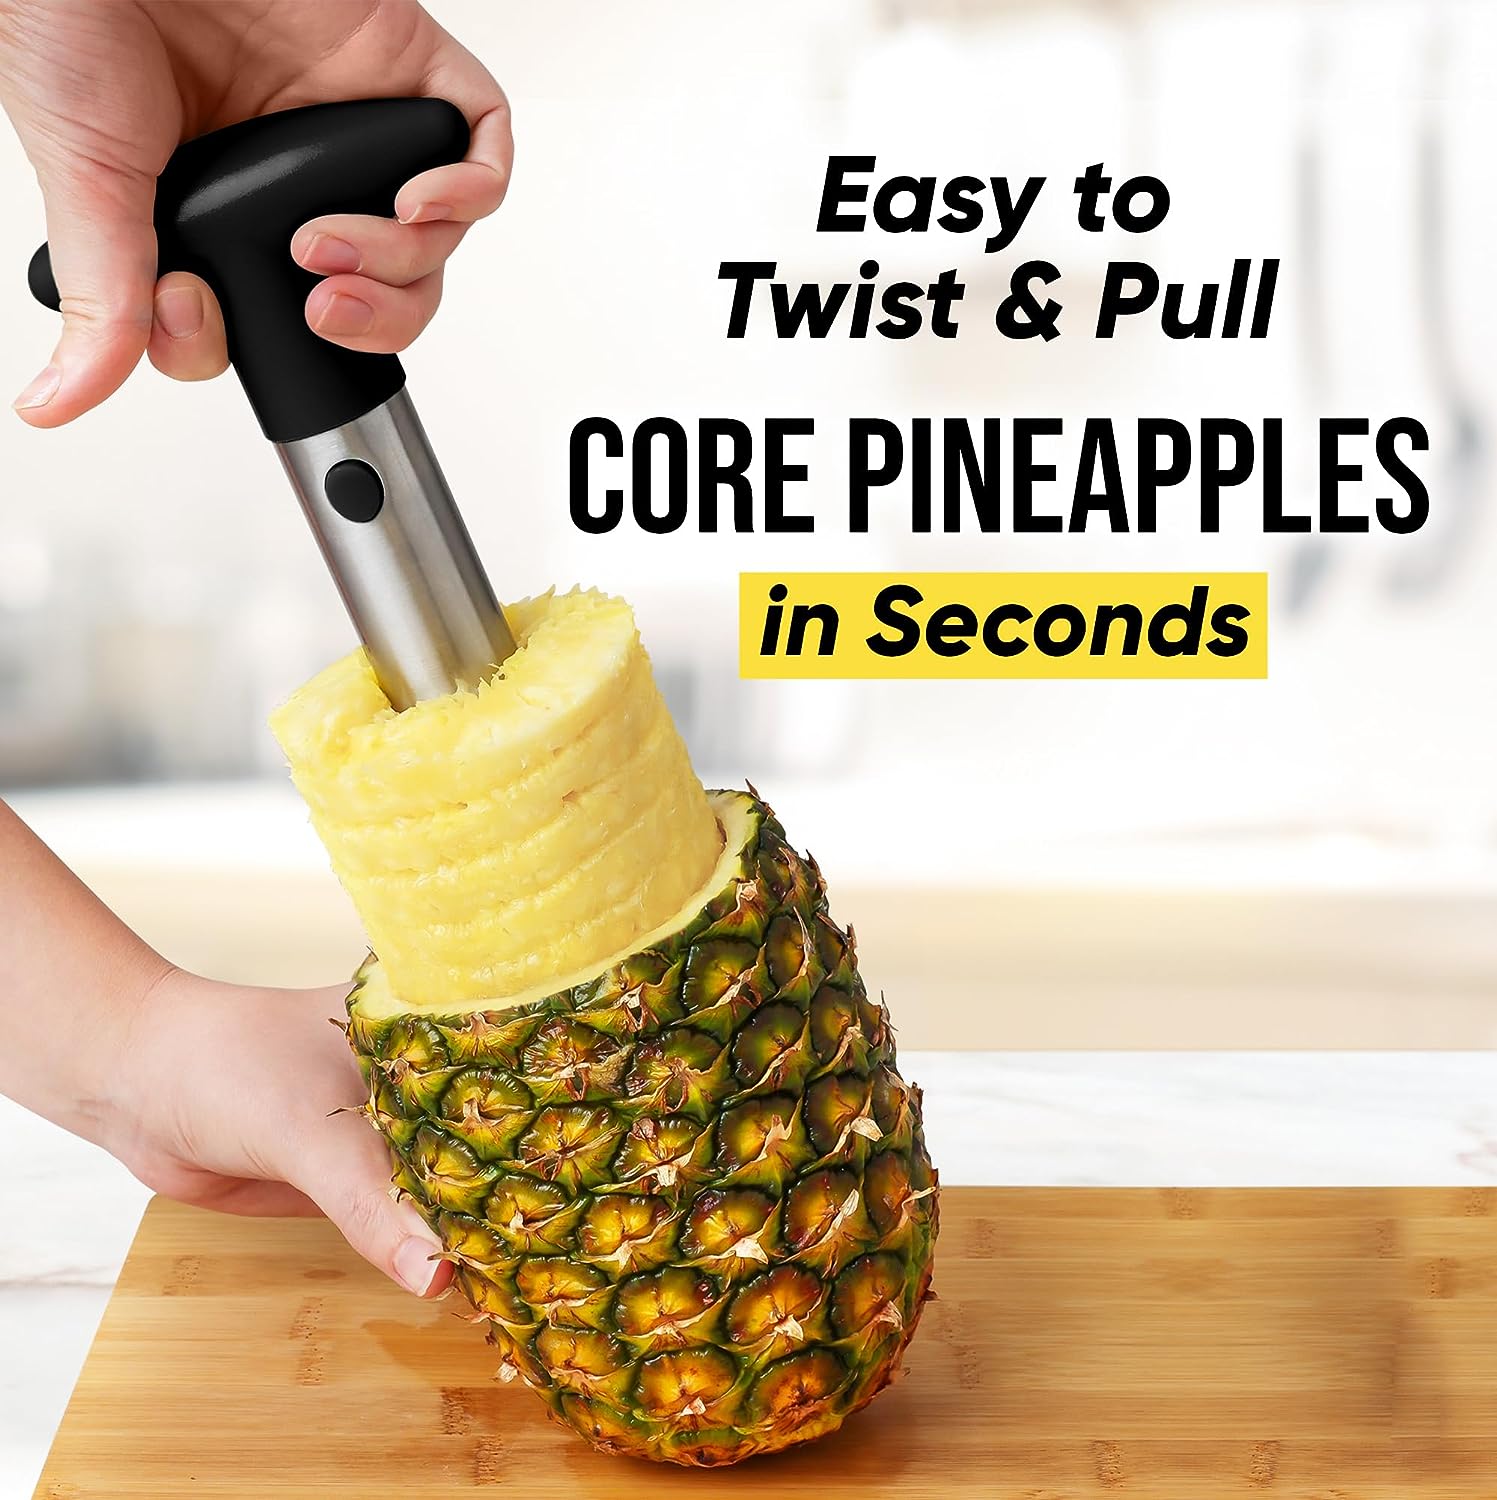 Pineapple Corer and Slicer Tool